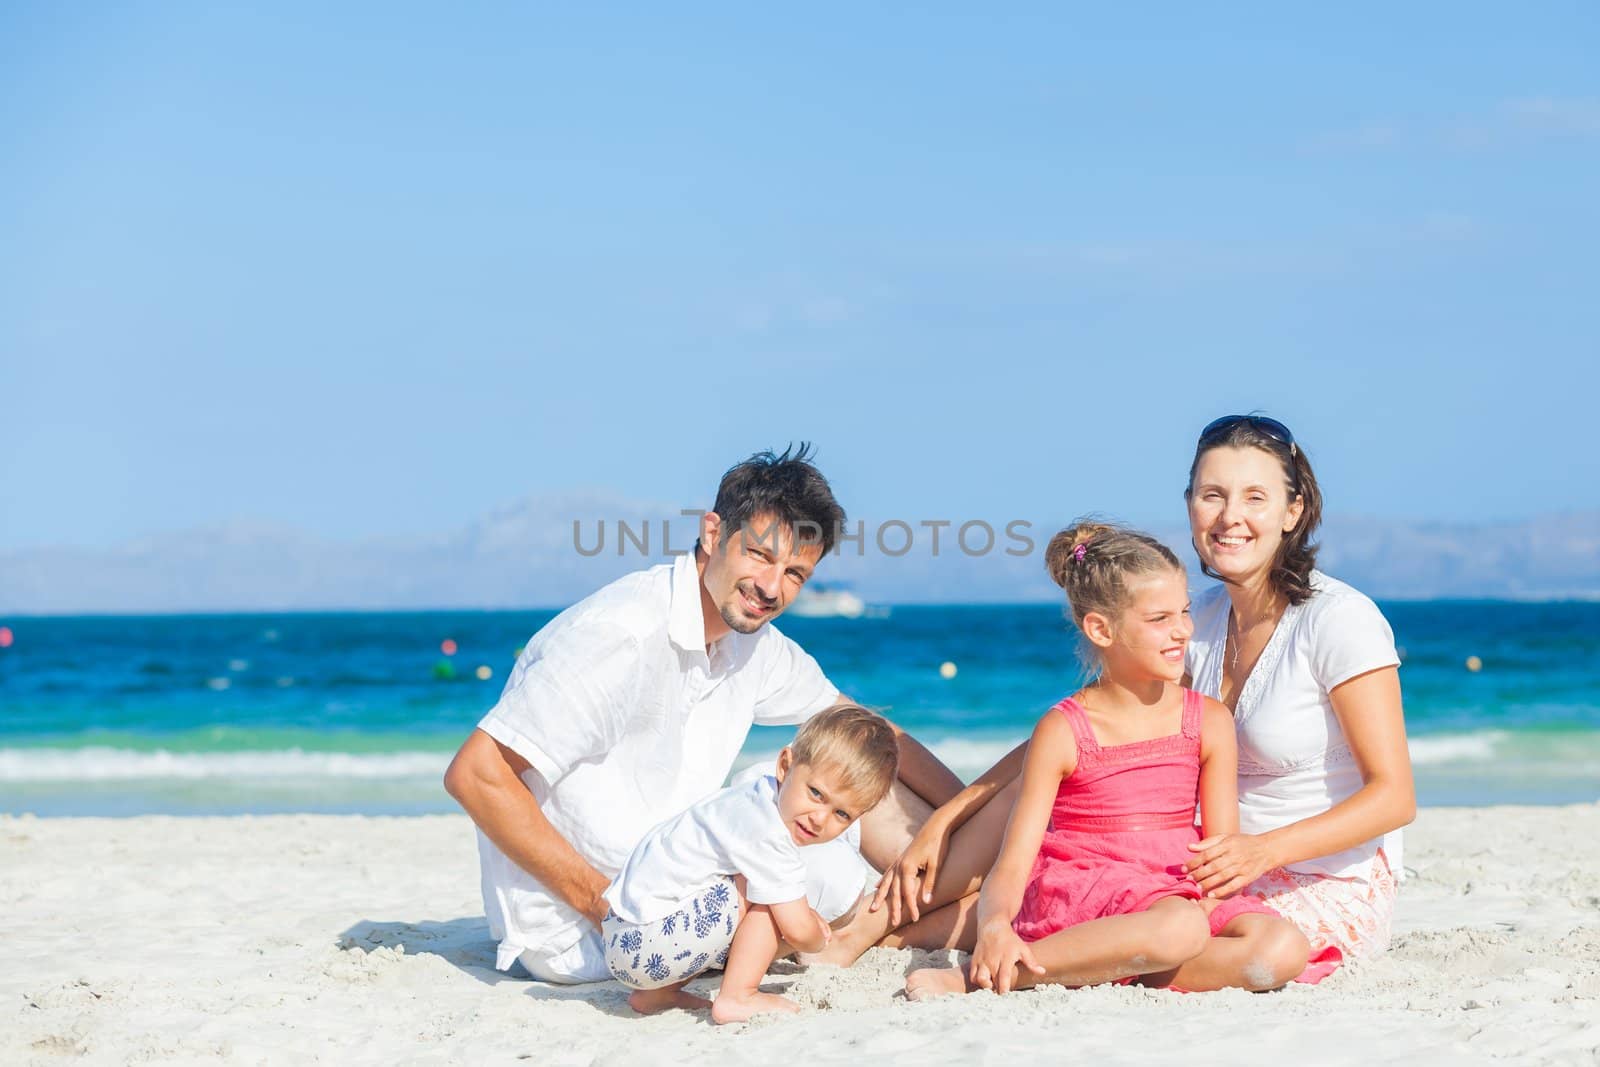 Family of four on tropical beach by maxoliki